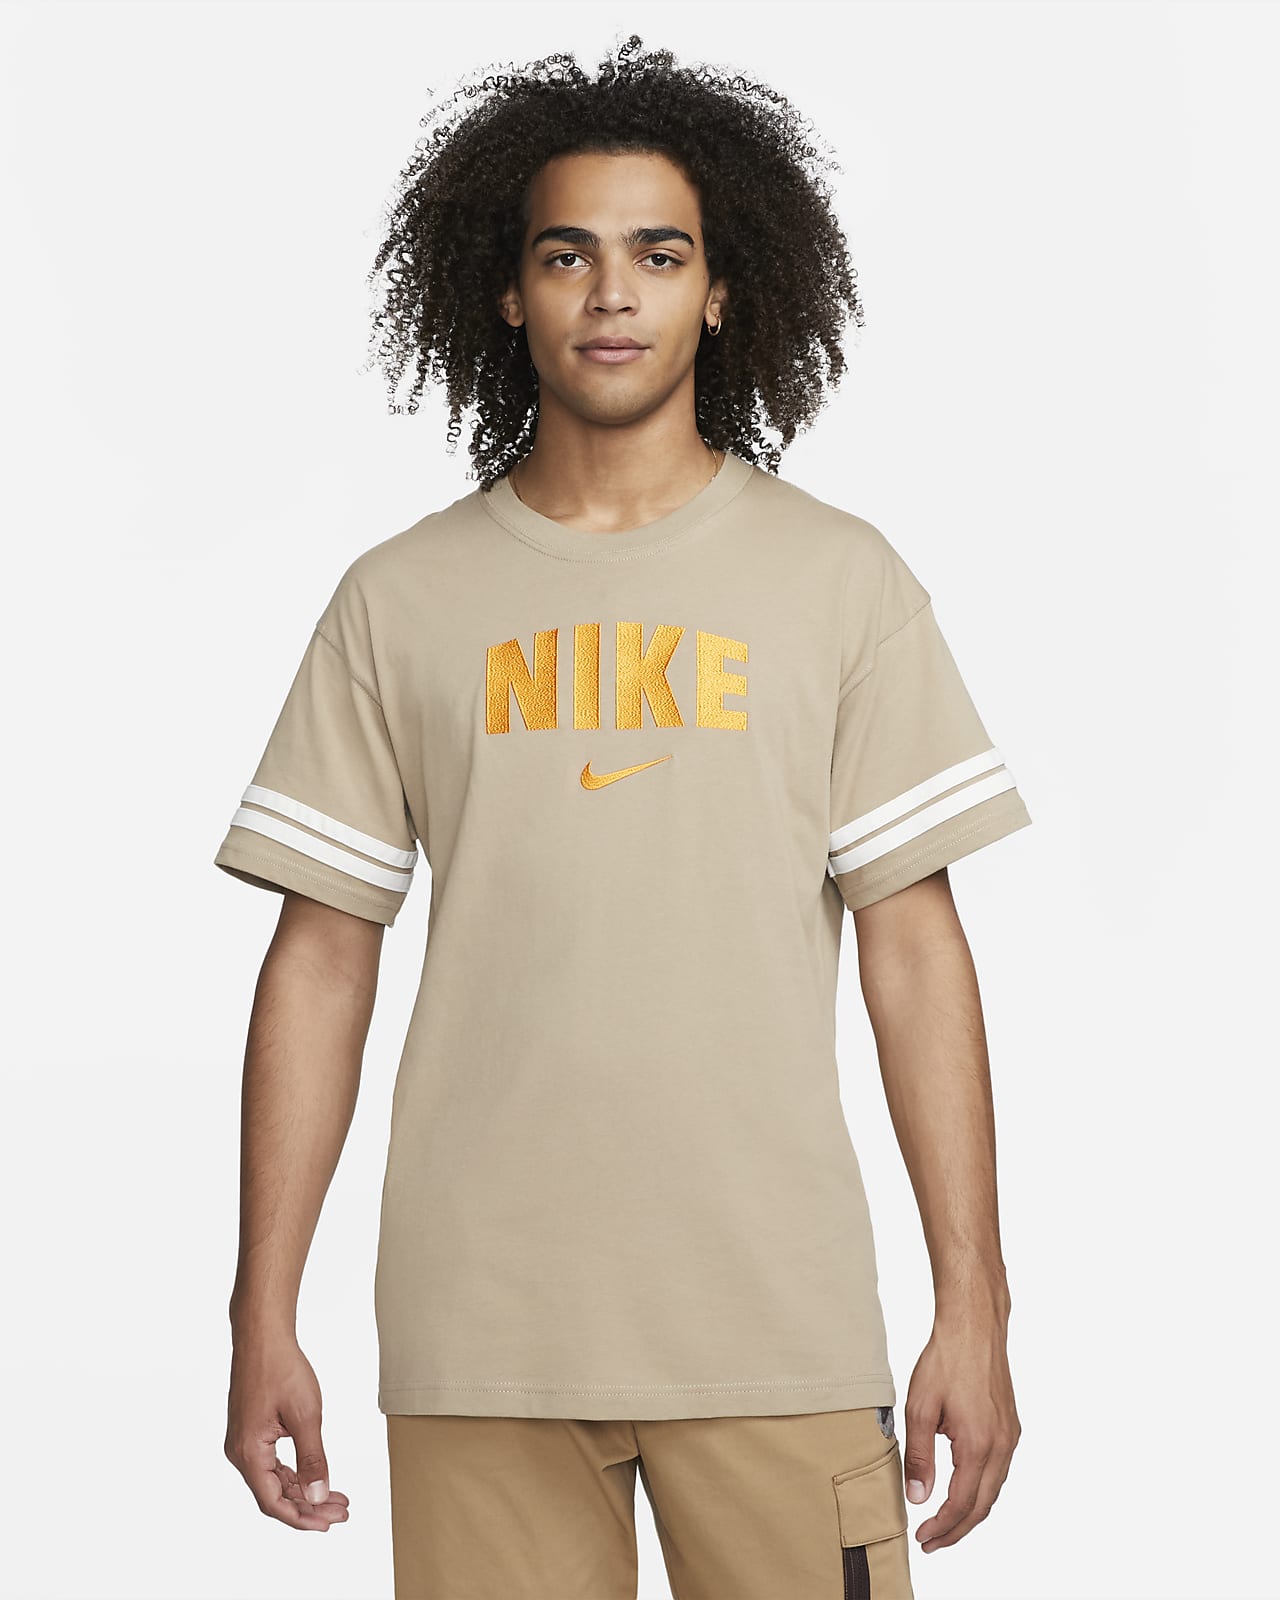 Nike Sportswear Men's Retro T-Shirt